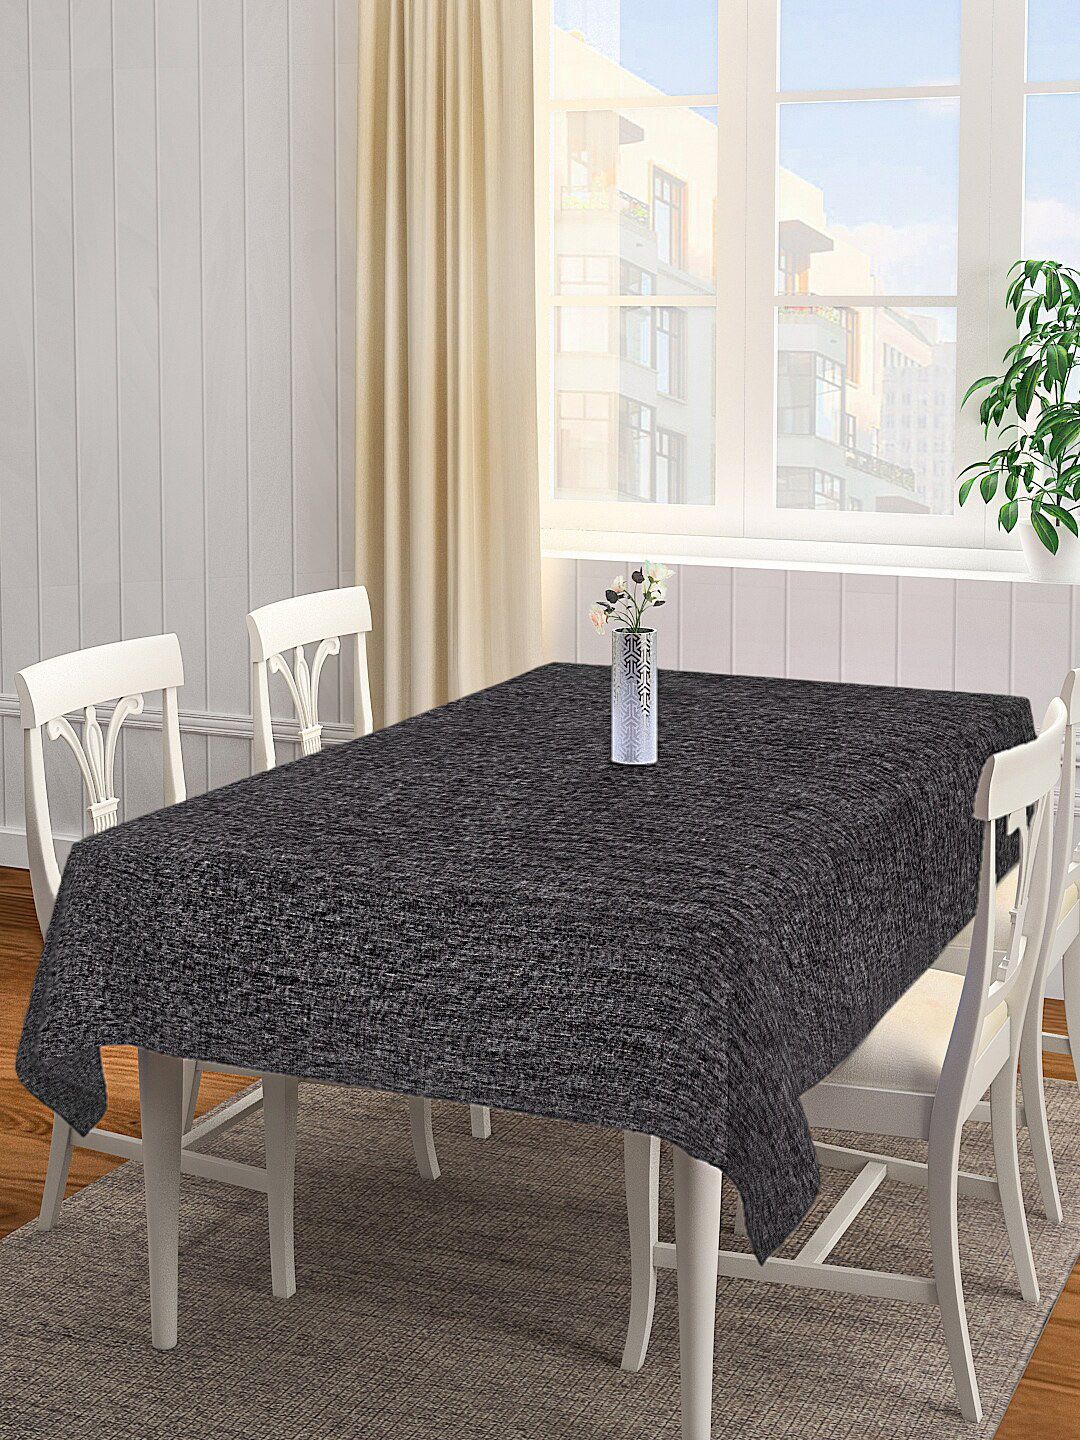 KLOTTHE Black Woven-Design 6 Seater Rectangular Cotton Table Cover Price in India